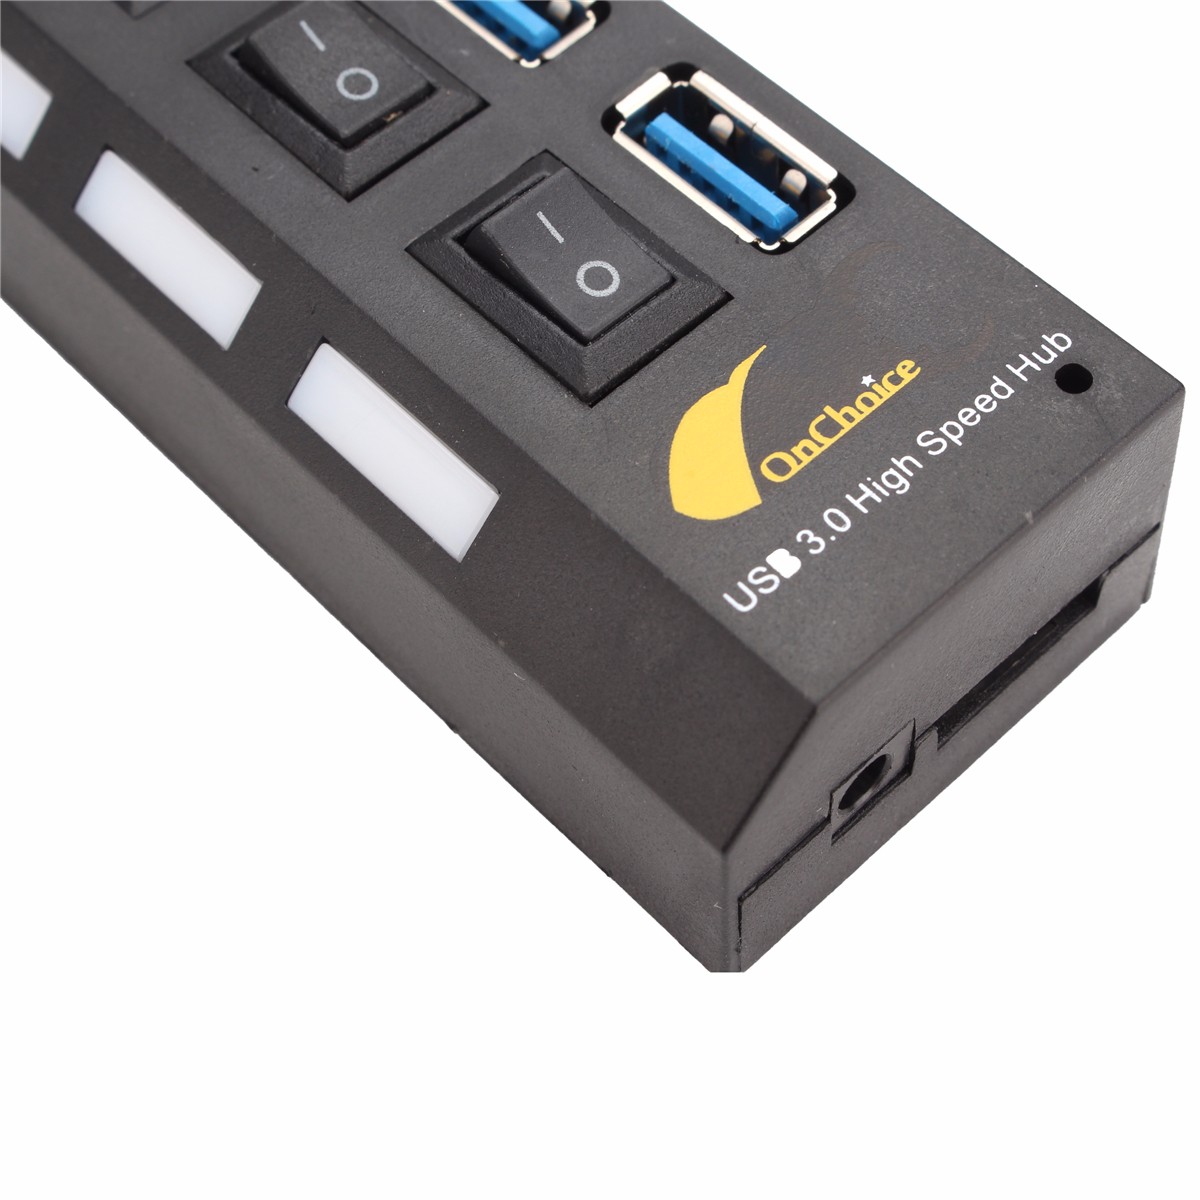 ONCHOICE 7Port USB 3.0 Hub On/Off Switch EU US UK AC Power Adapter For Laptop Desktop 48